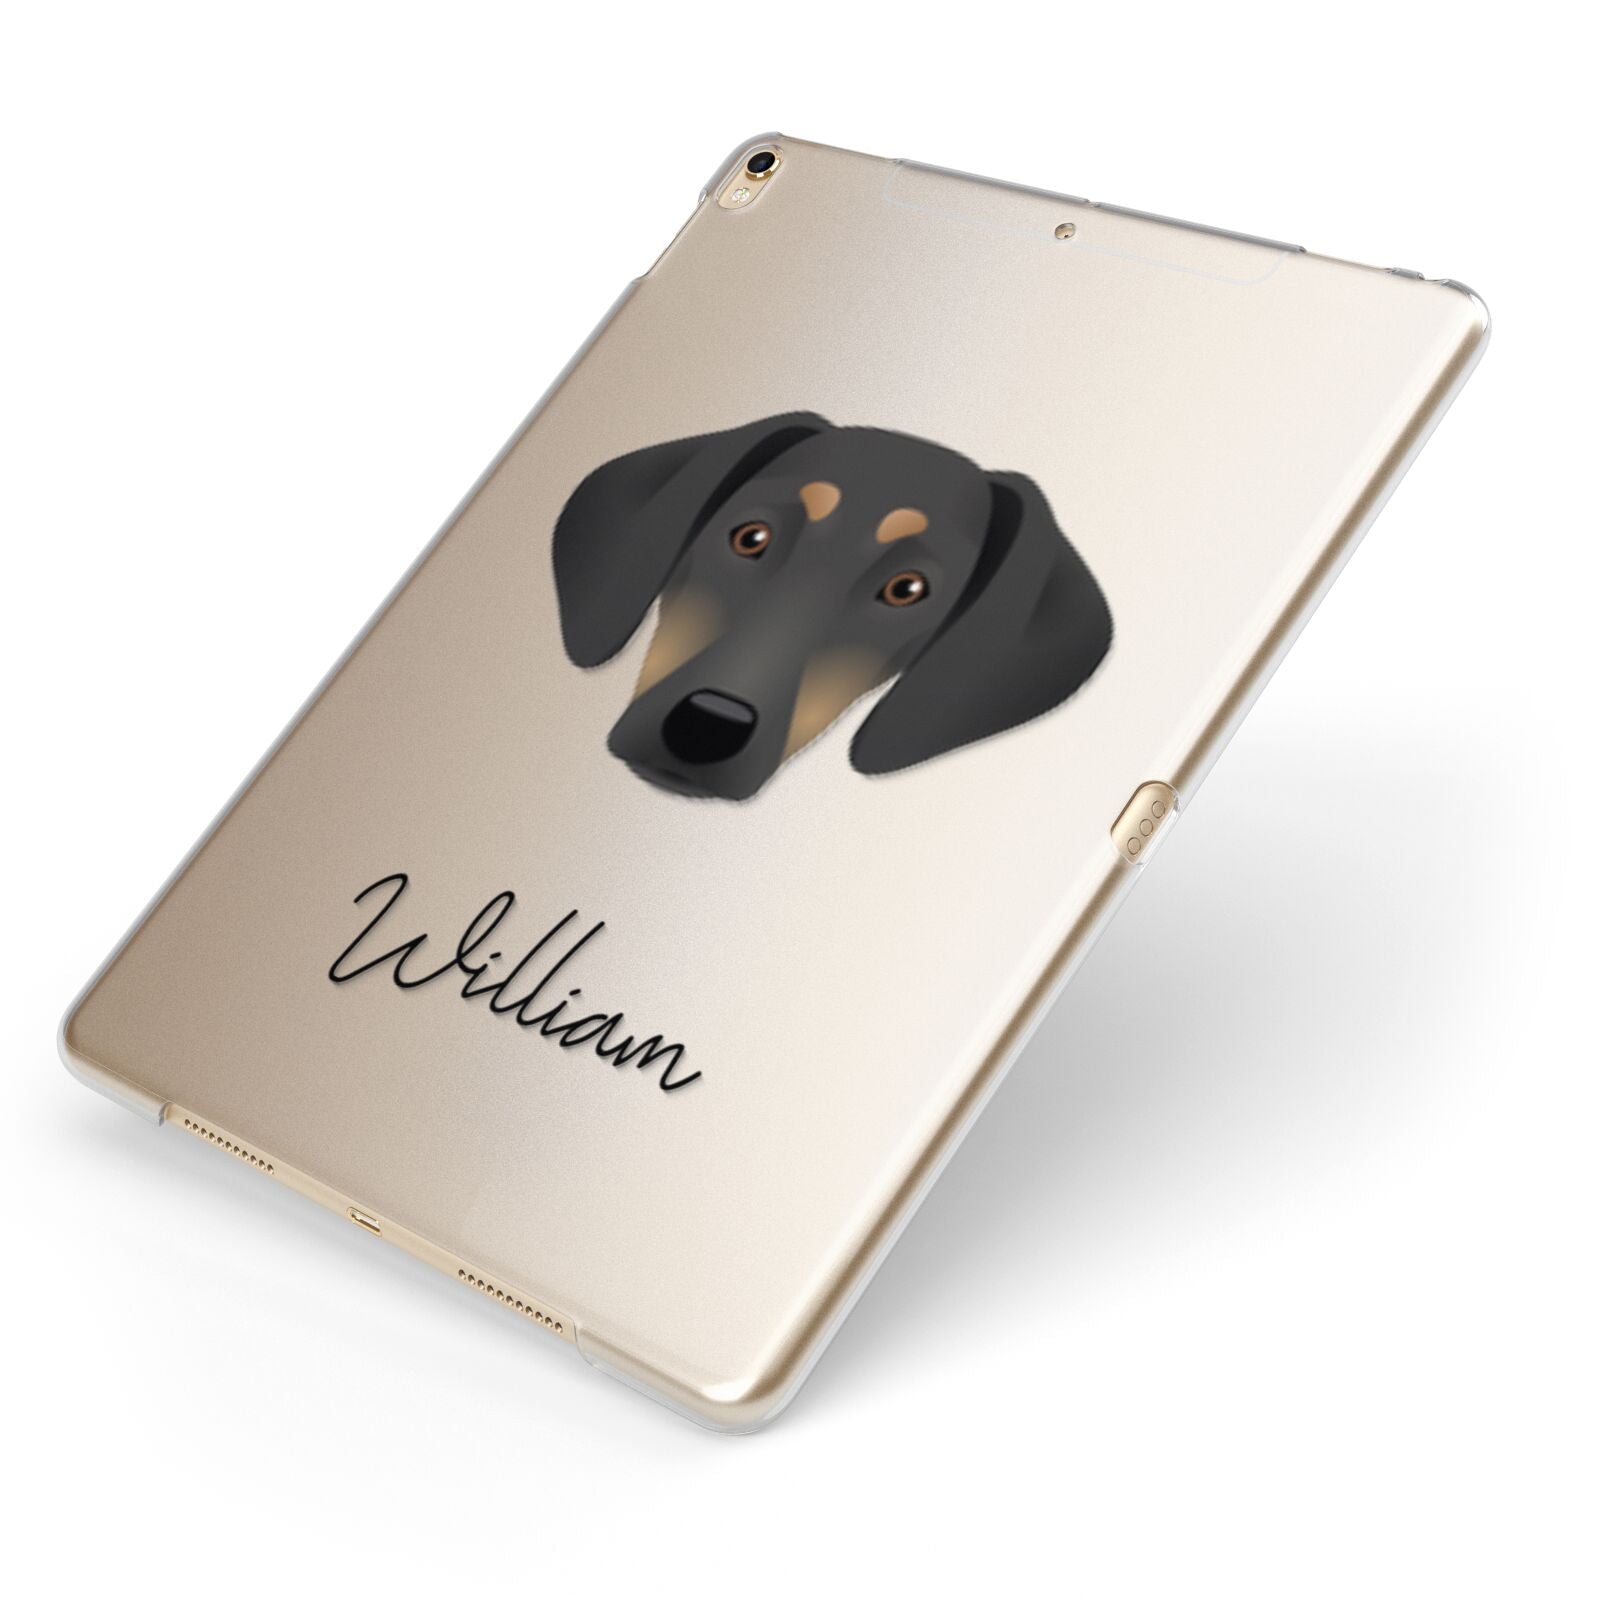 Greek Harehound Personalised Apple iPad Case on Gold iPad Side View